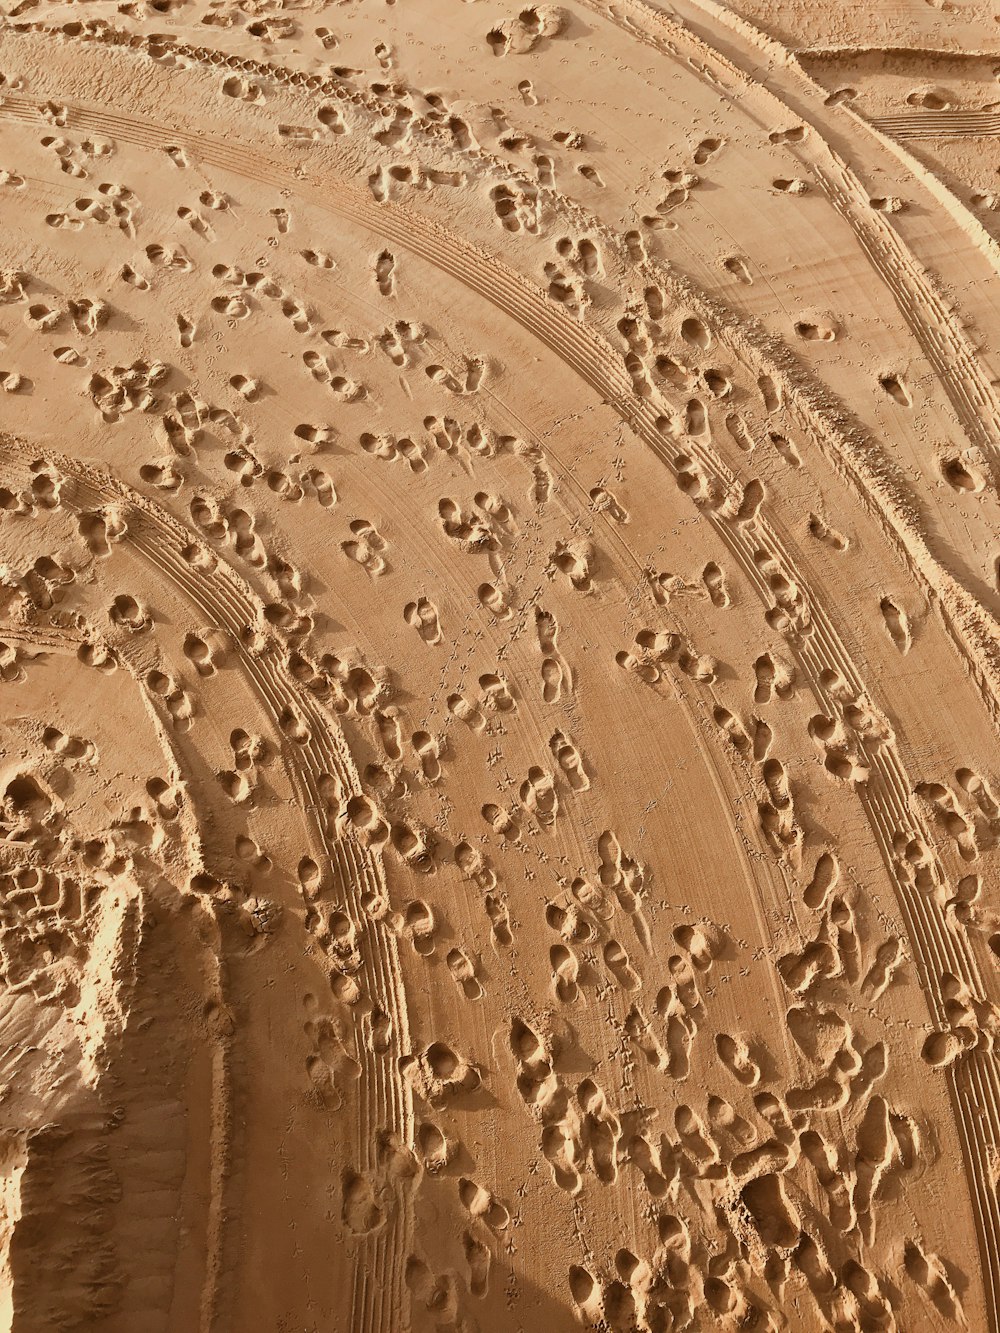 foot prints on sand